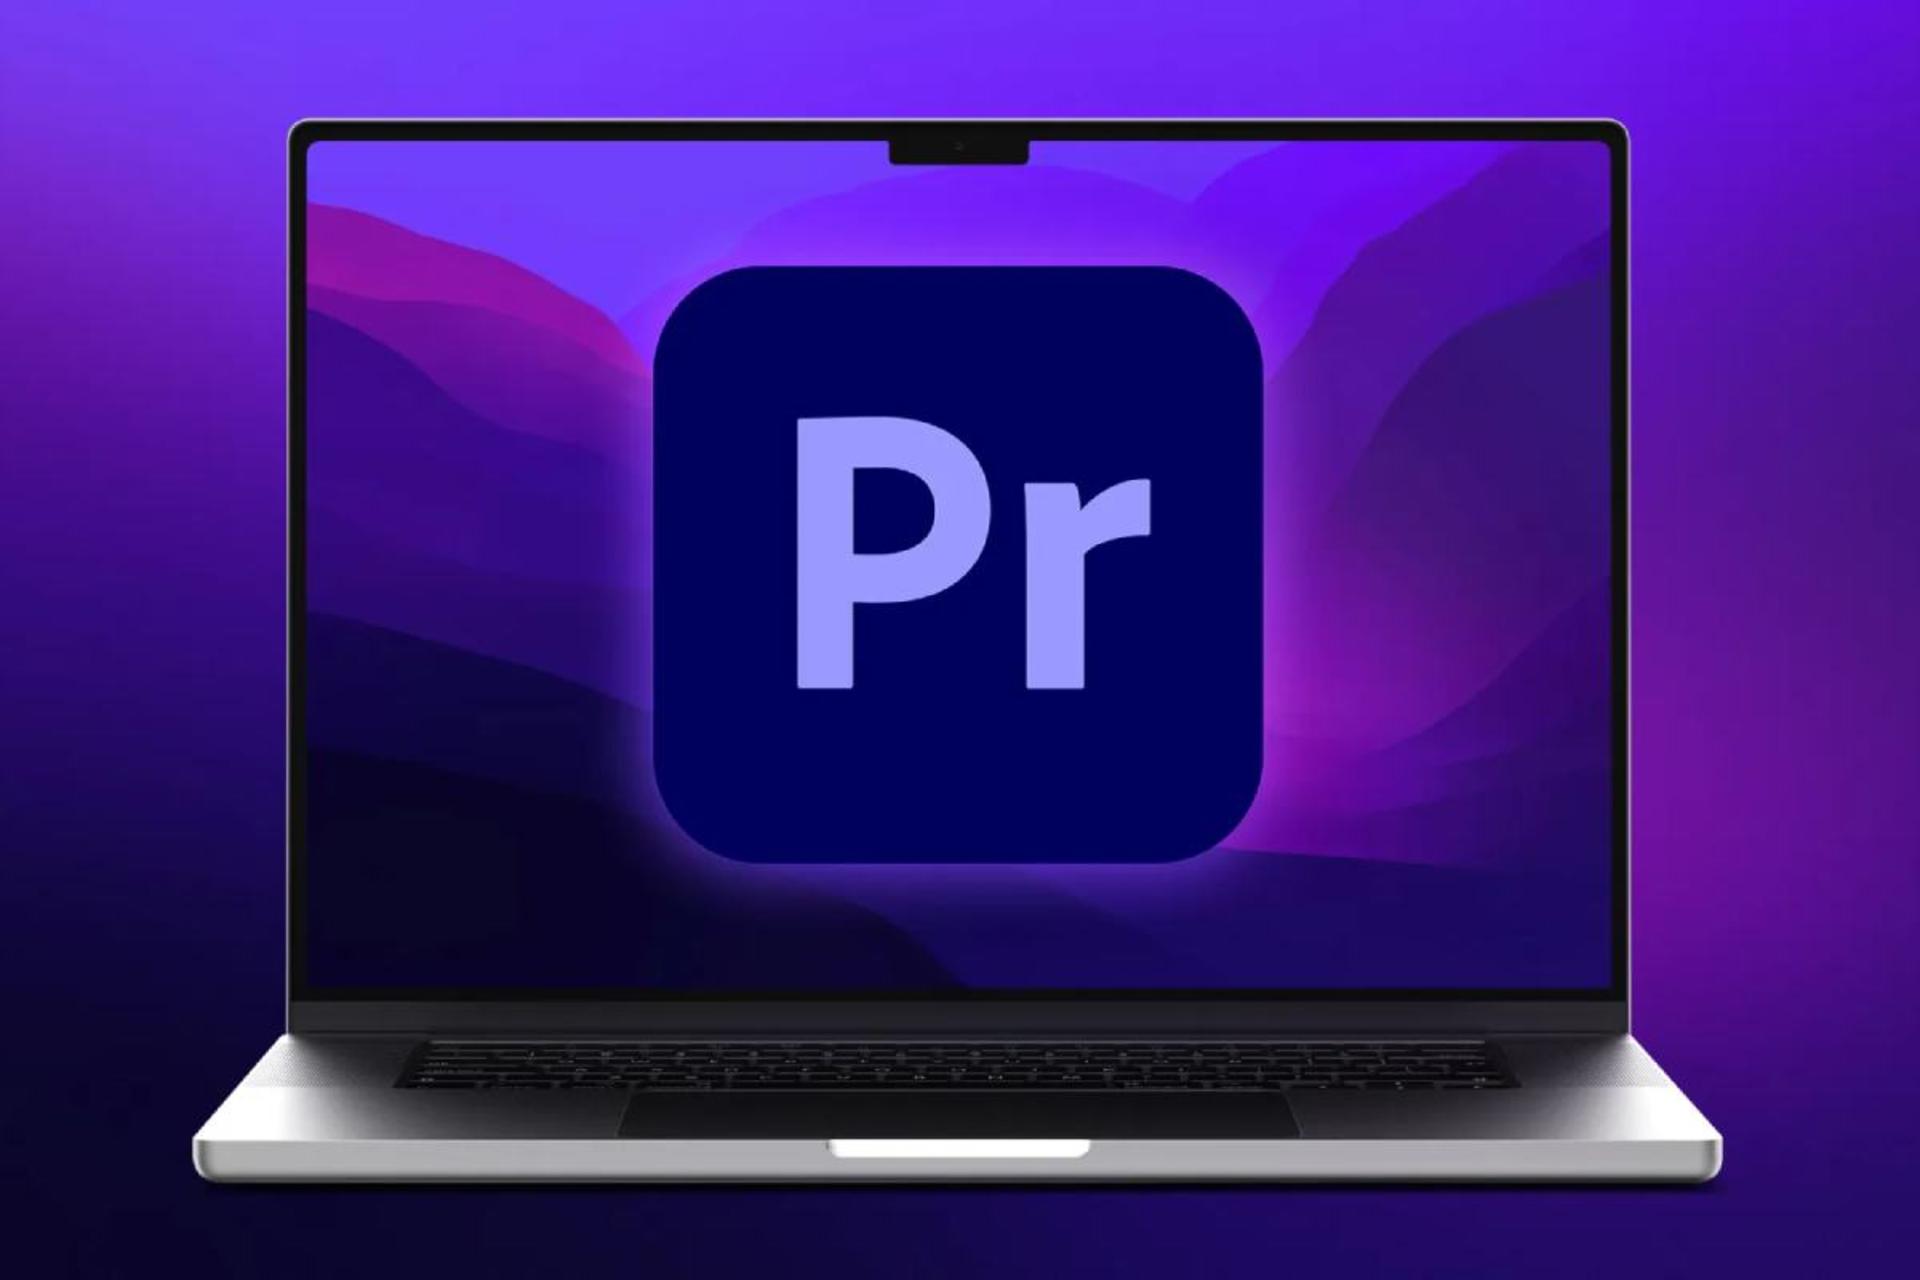 لوگو پریمیر پرو روی صفحه لپ تاپ با زمینه بنفش